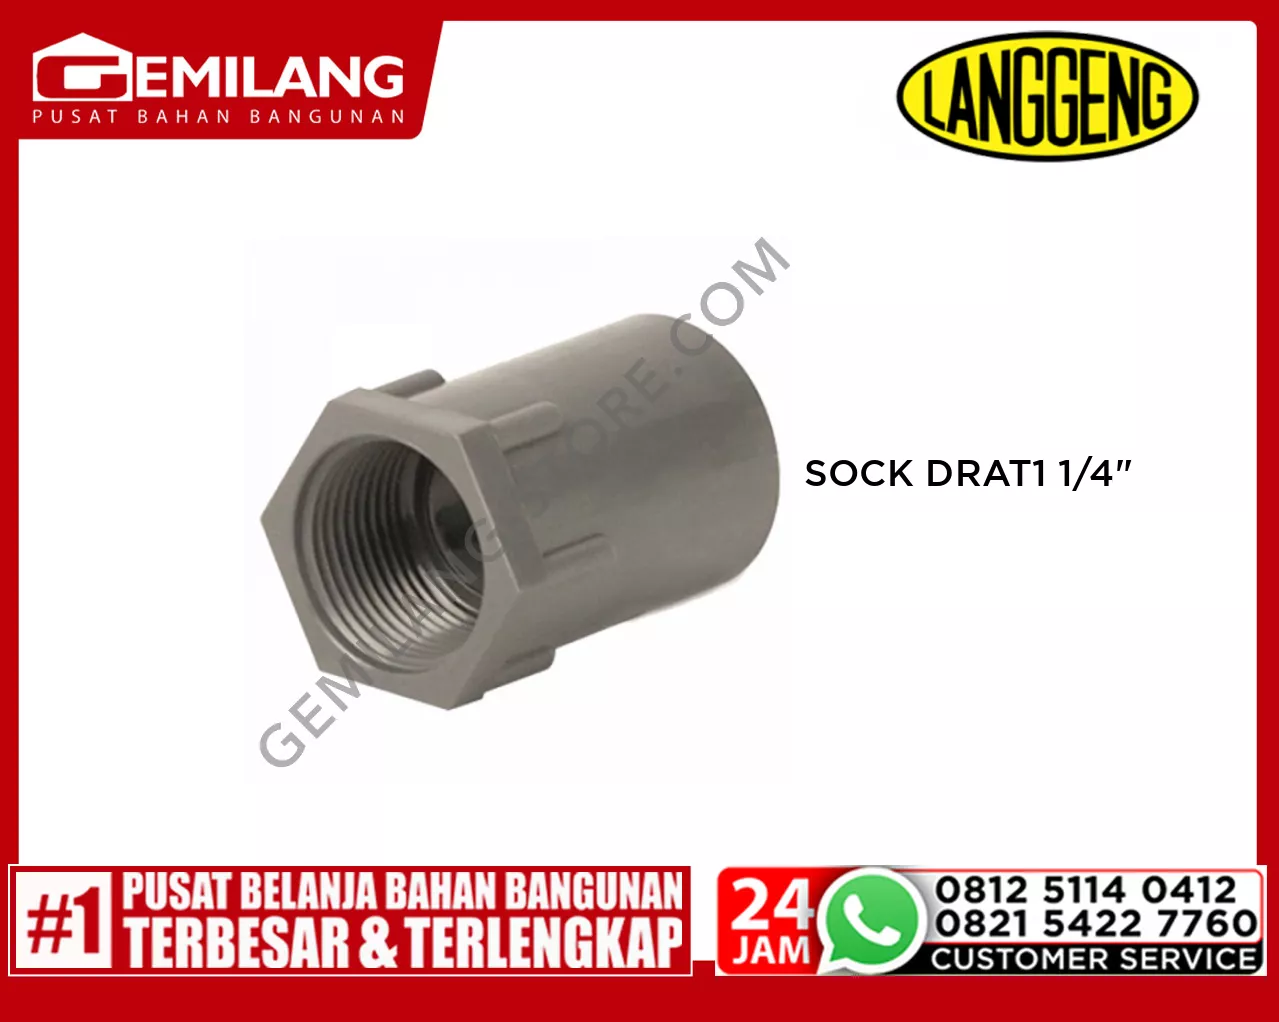 LANGGENG SOCK DRAT DALAM PVC 1 1/4inch